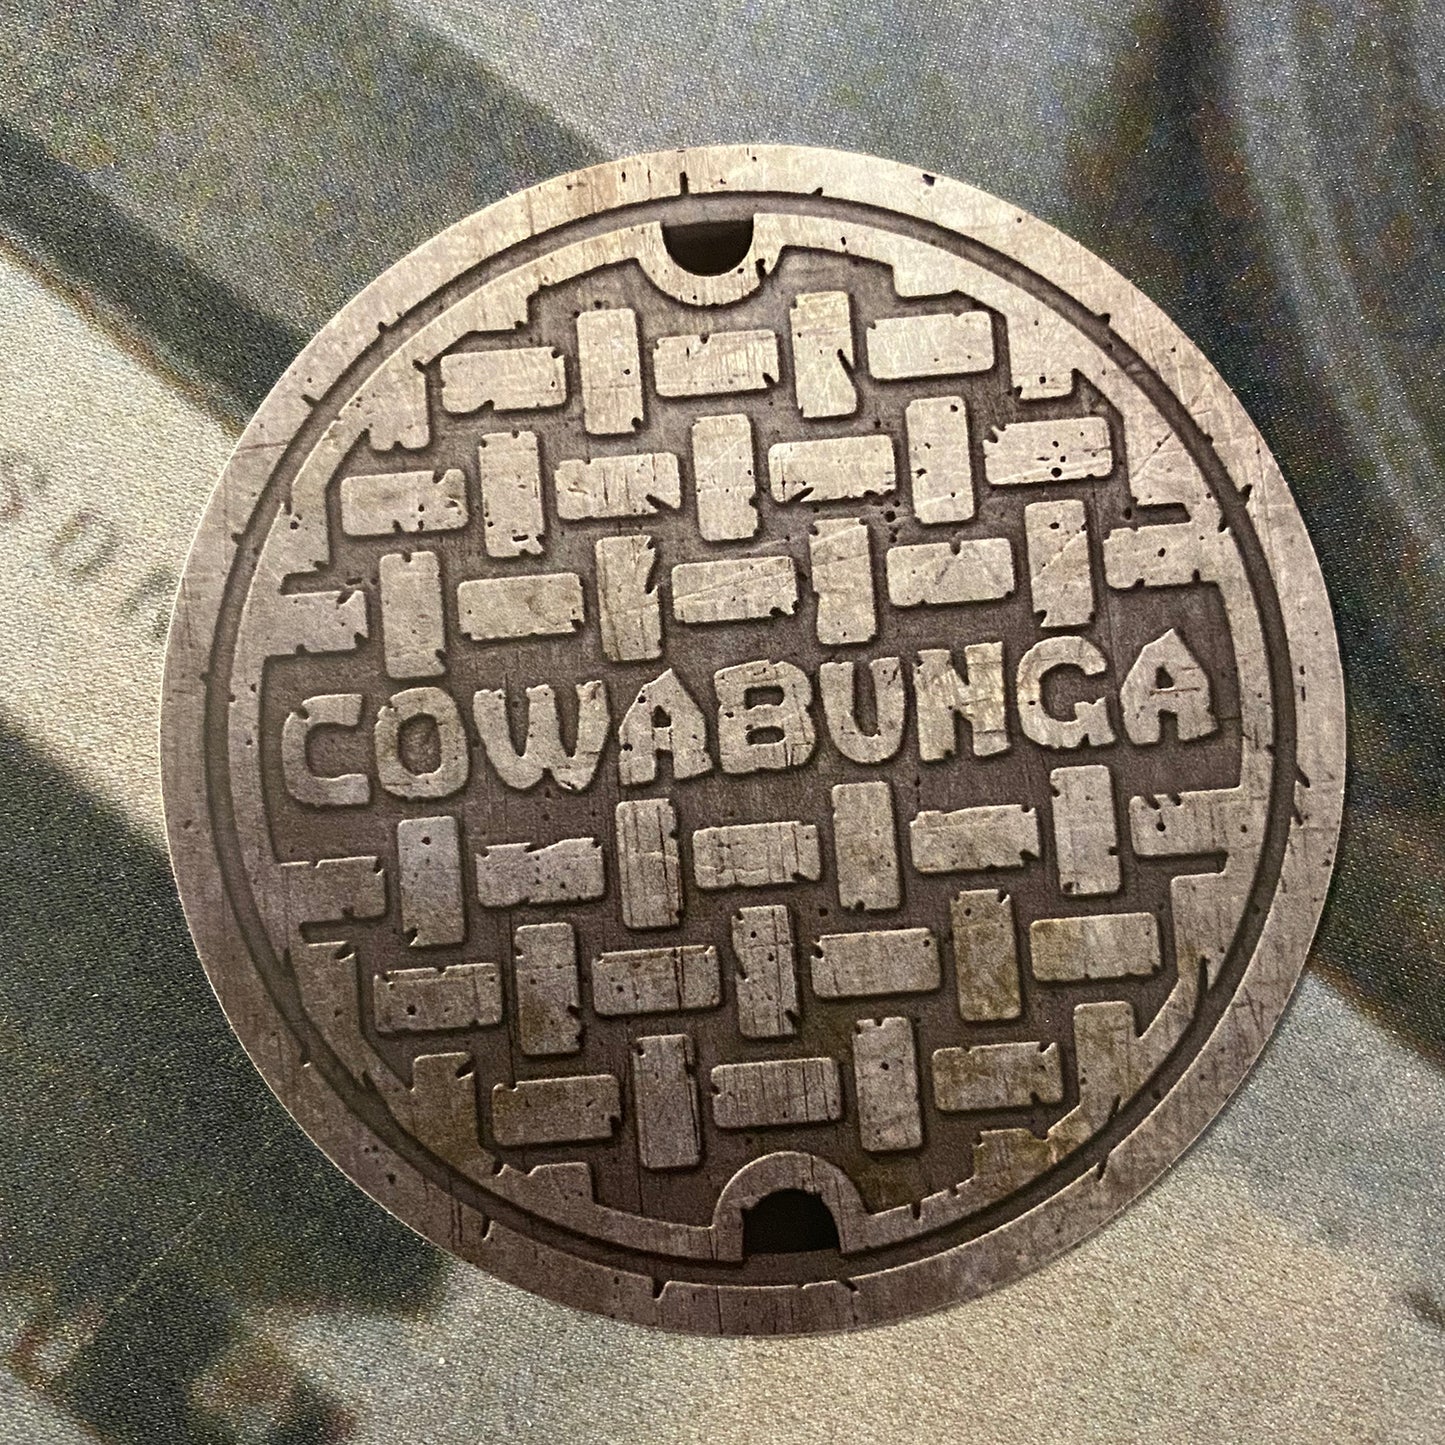 Cowabunga From Down Unda vinyl sticker